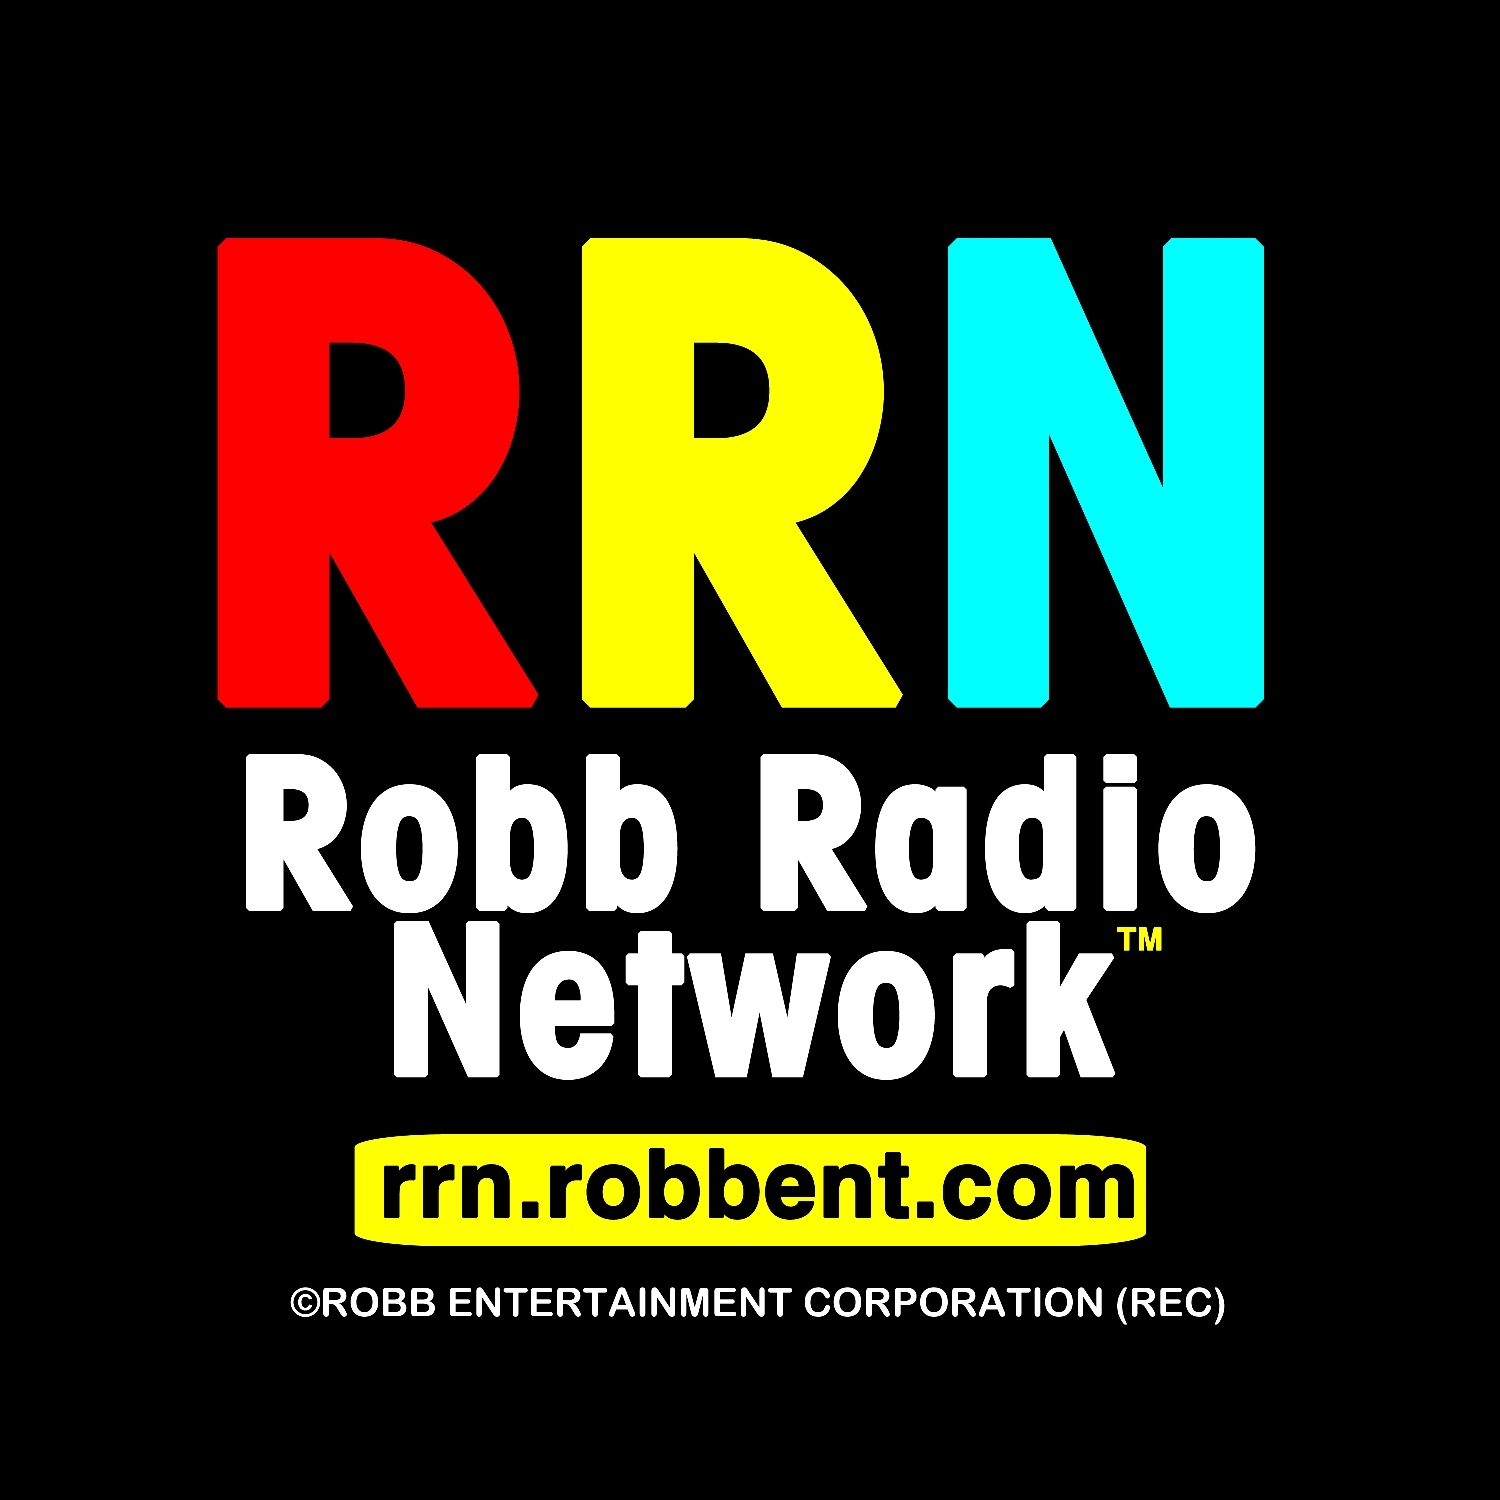 RRN_box_logo.jpg